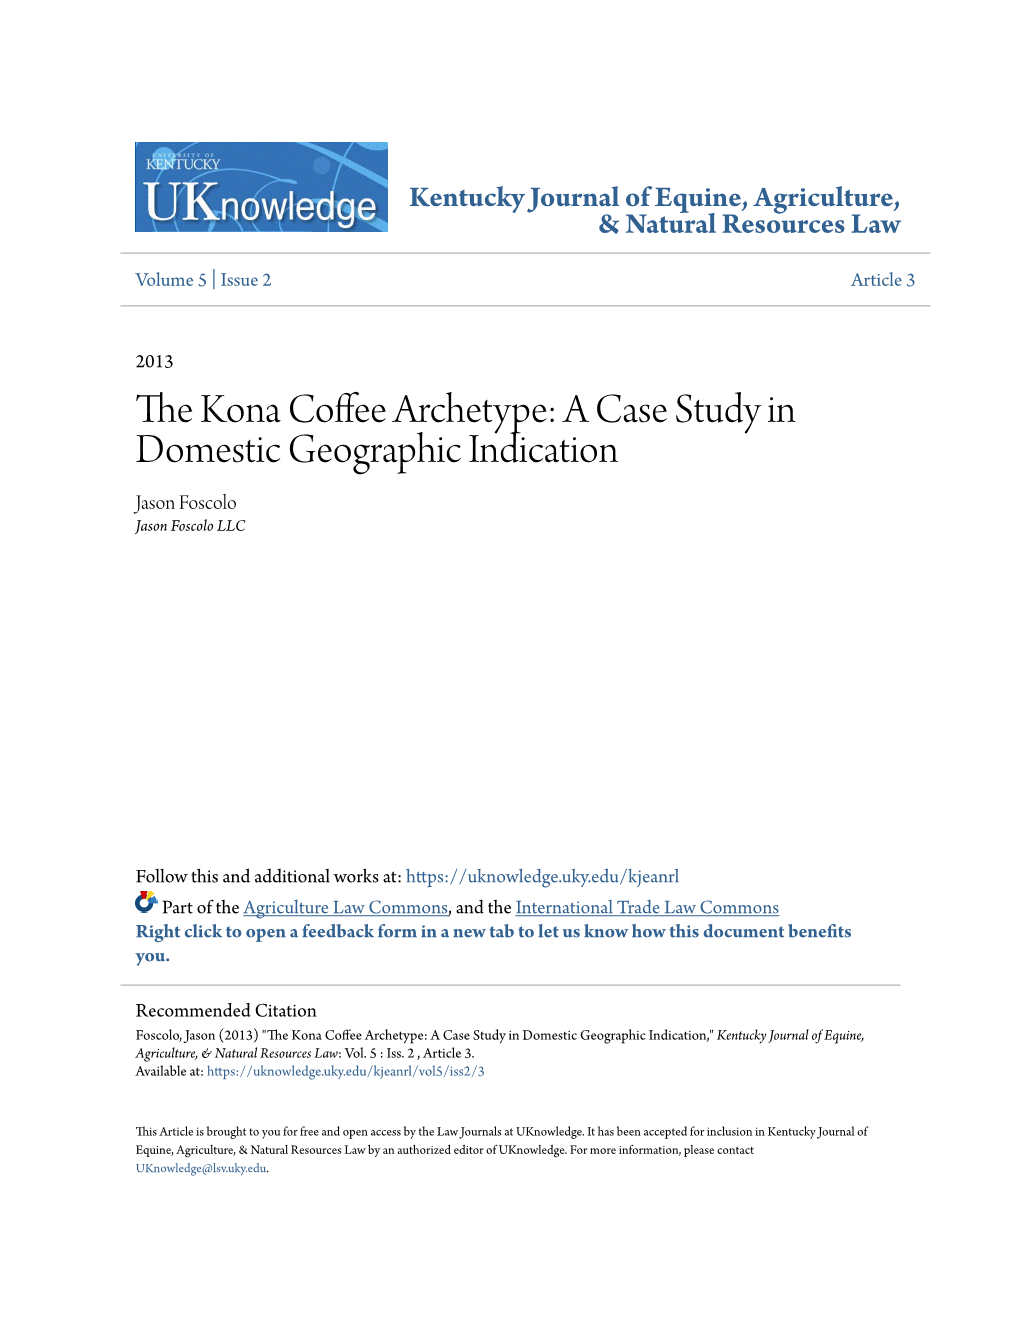 The Kona Coffee Archetype: a Case Study in Domestic Geographic Indication Jason Foscolo Jason Foscolo LLC